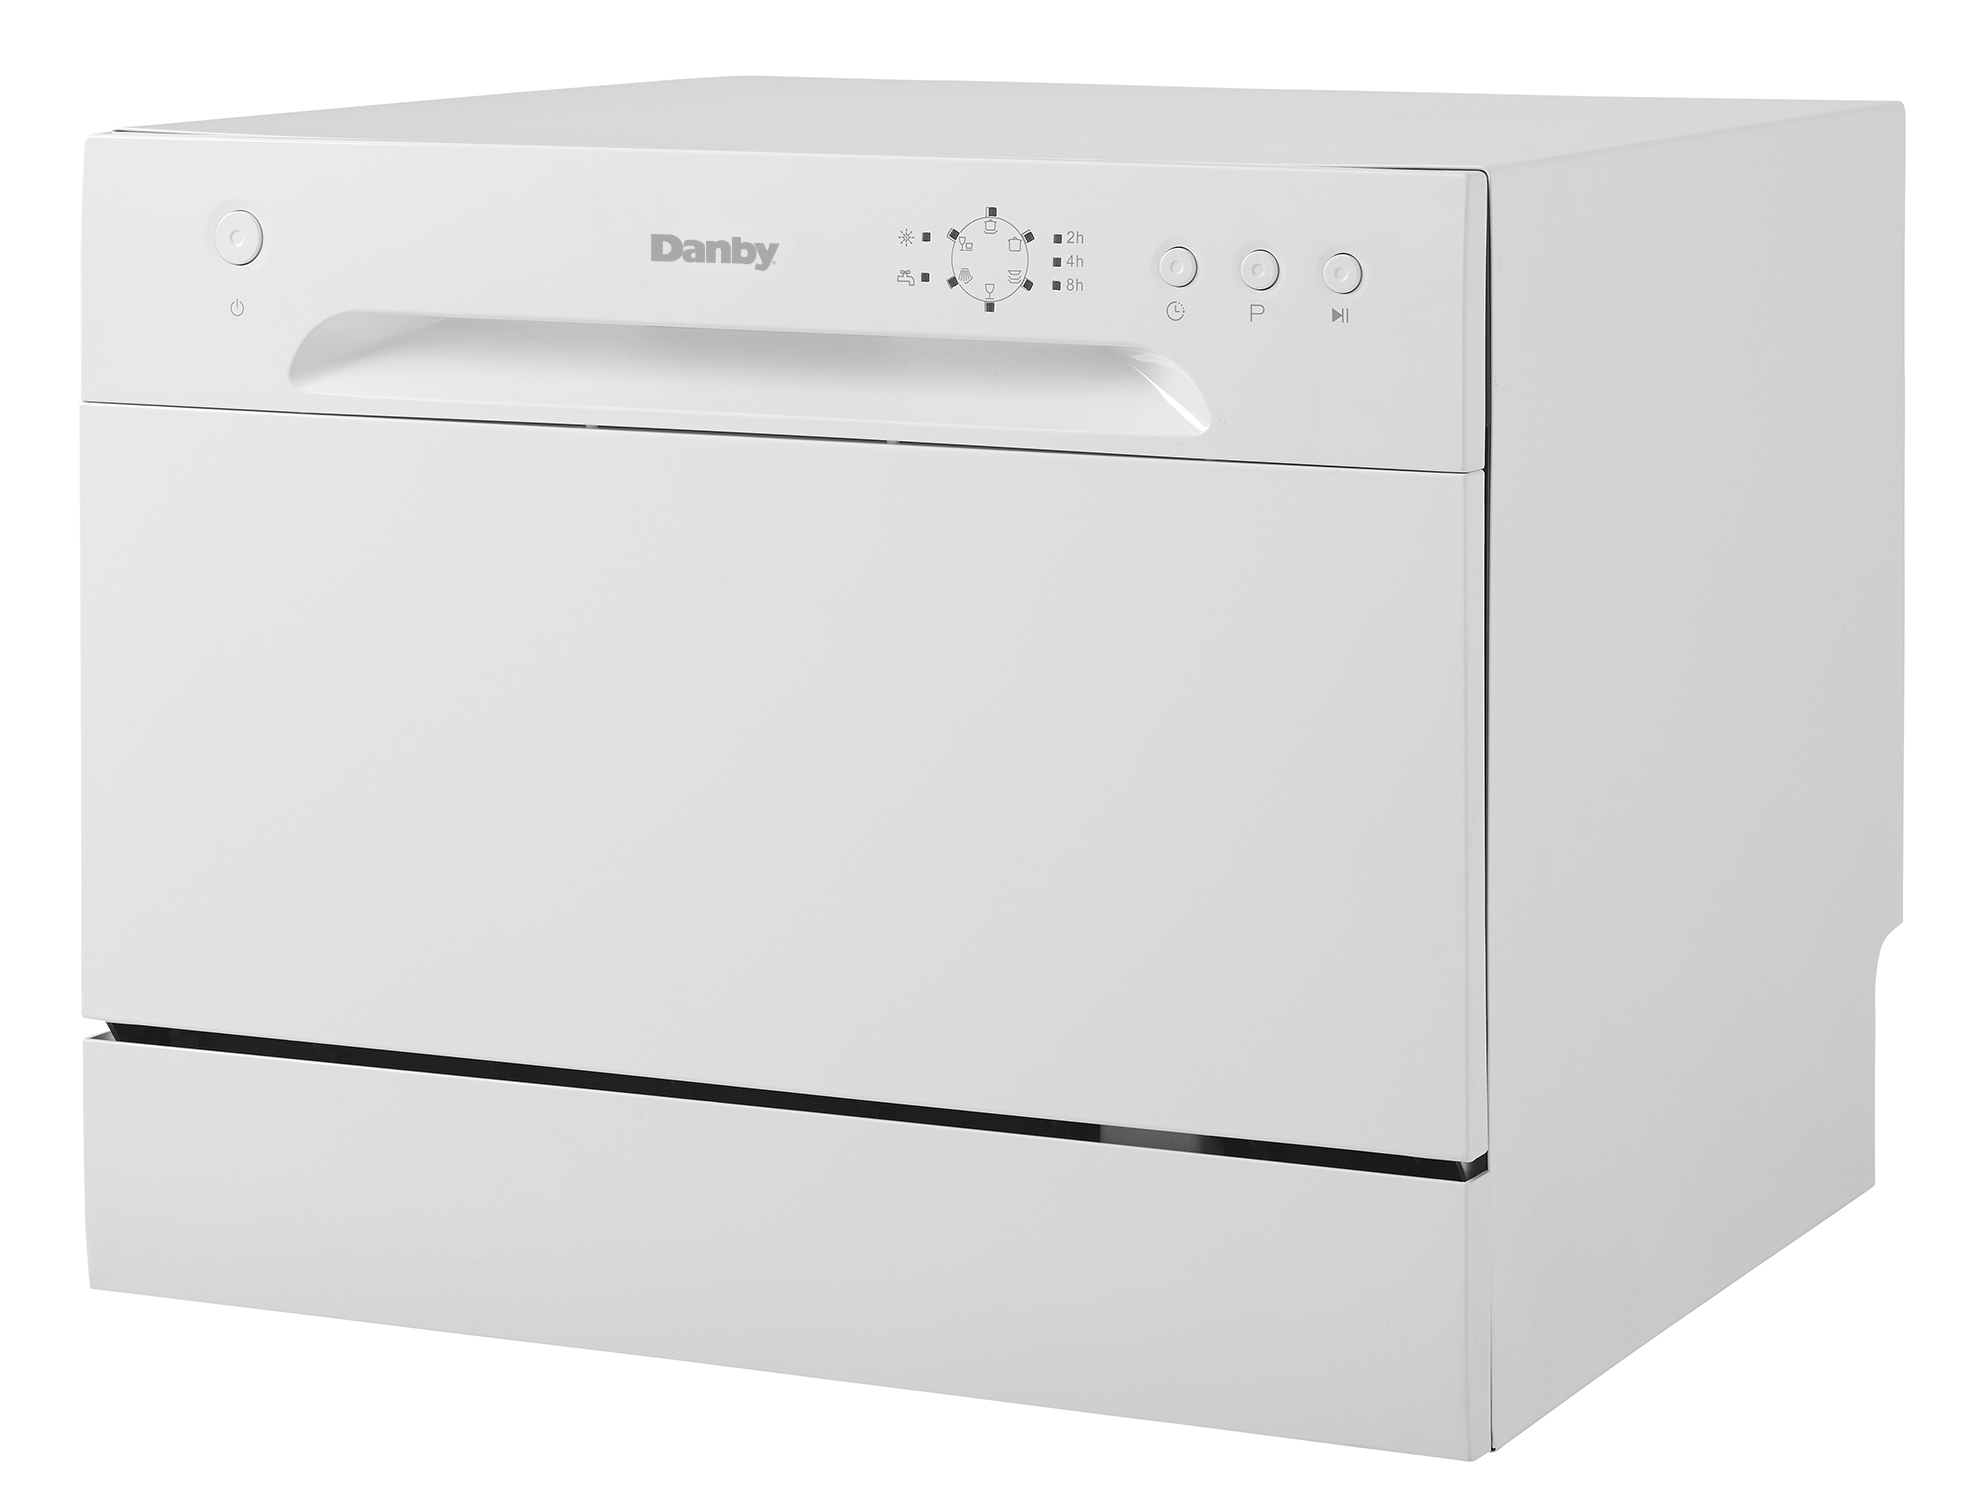 Danby 6 Place Setting Countertop Dishwasher